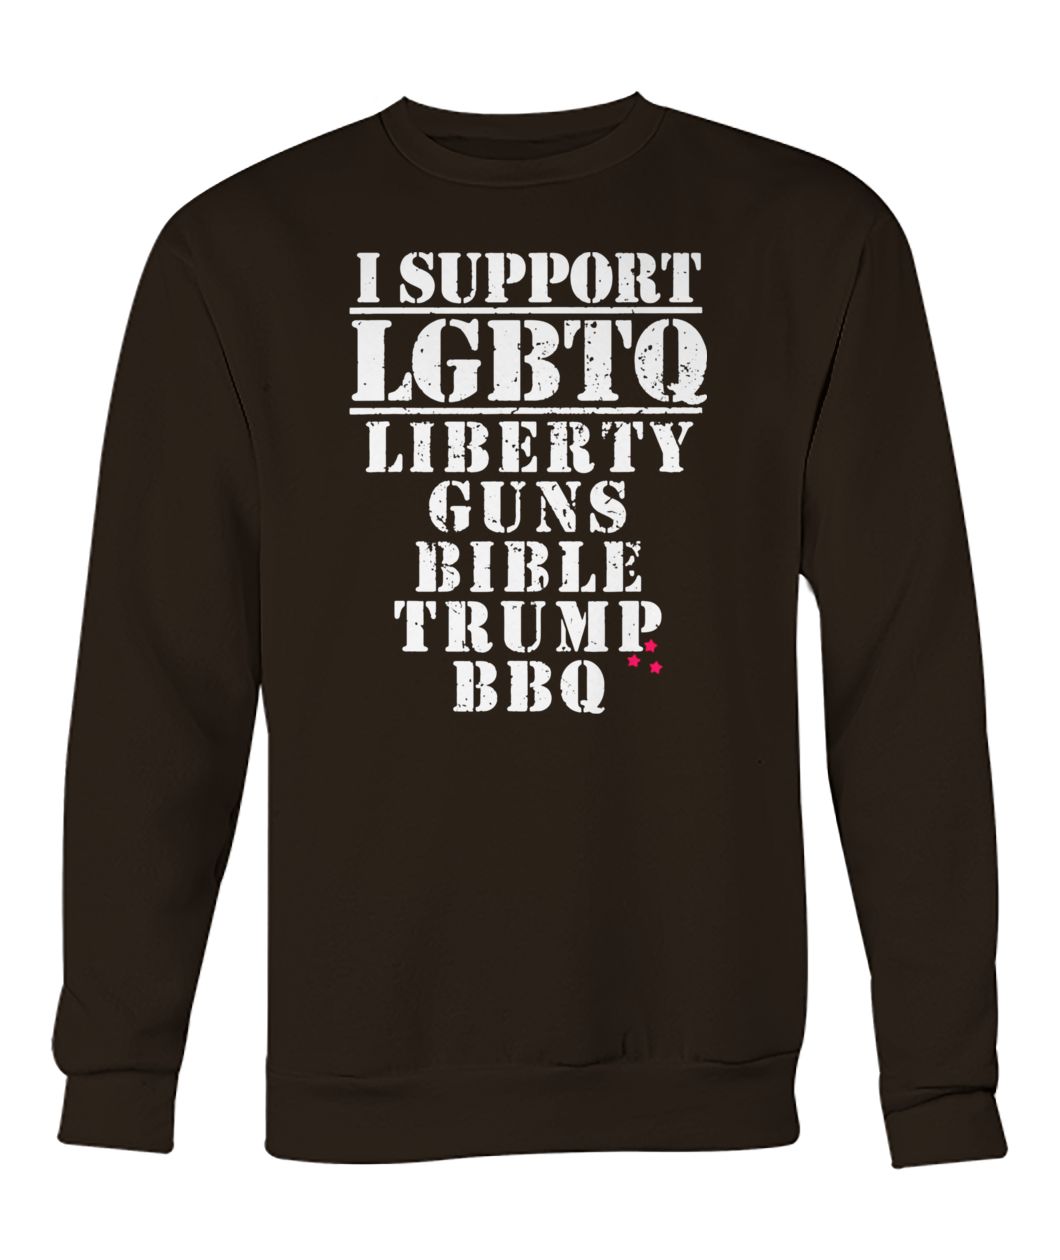 Kentucky bbq I support lgbtq liberty guns bible trump bbq crew neck sweatshirt